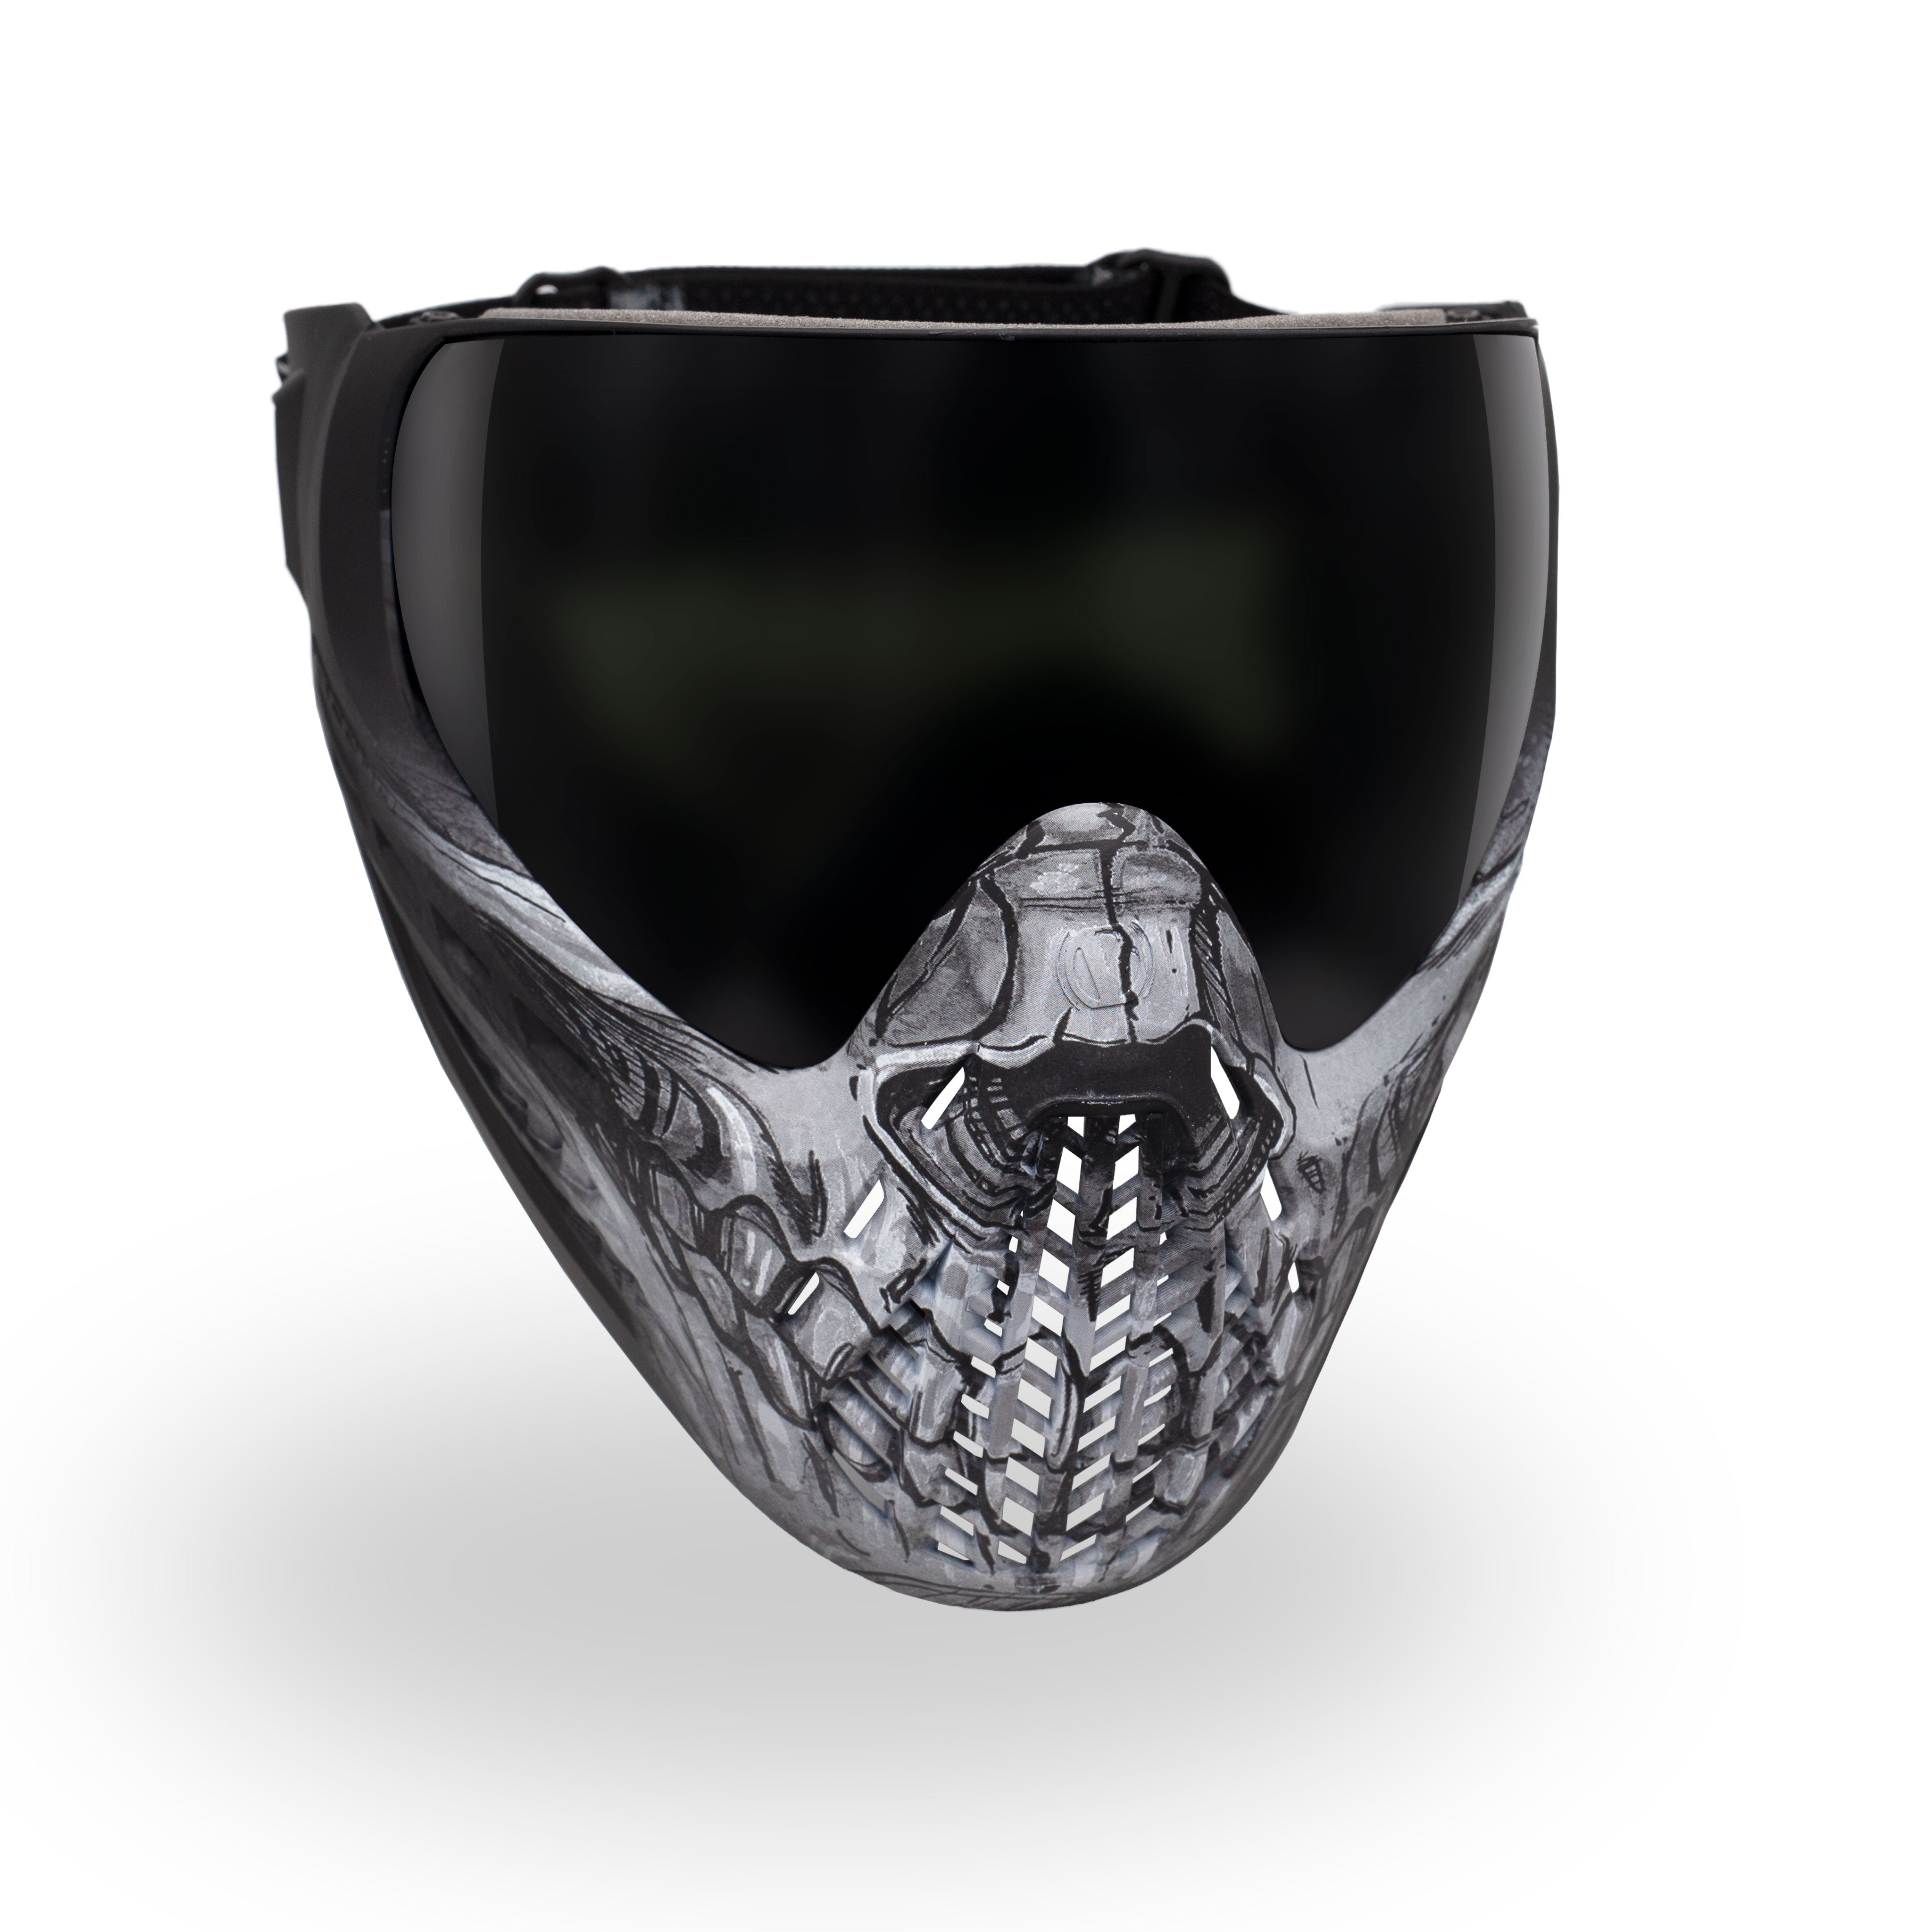 Virtue VIO Ascend Goggle - Skull LE - Limited to 250 Ever